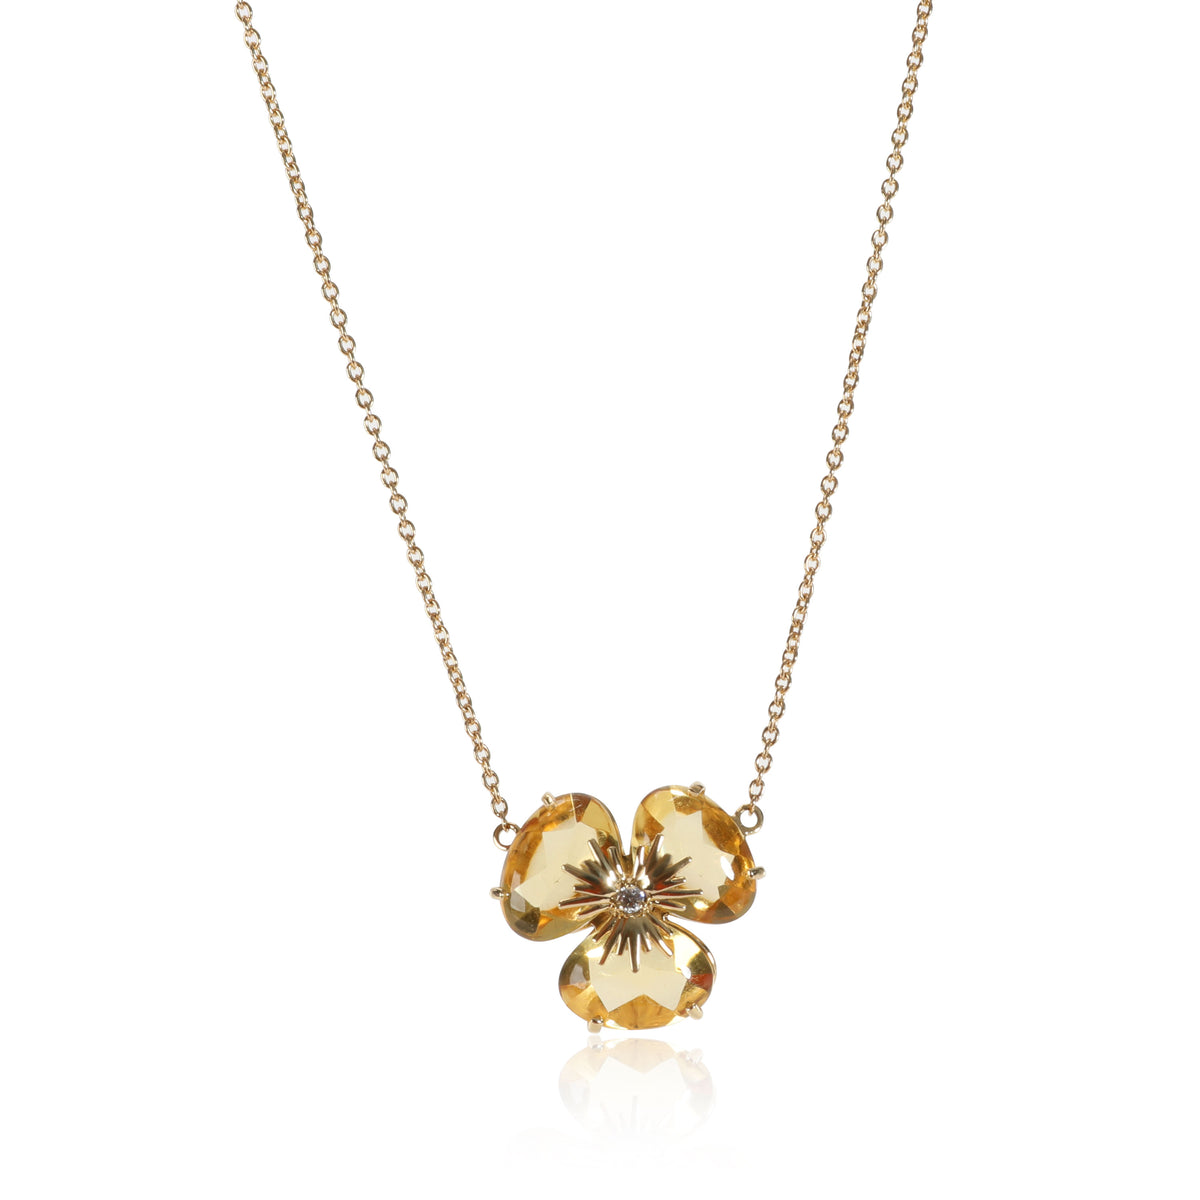 Authentic! Vintage Cartier 18K Yellow Gold Diamond Heart Clover Pendant Necklace